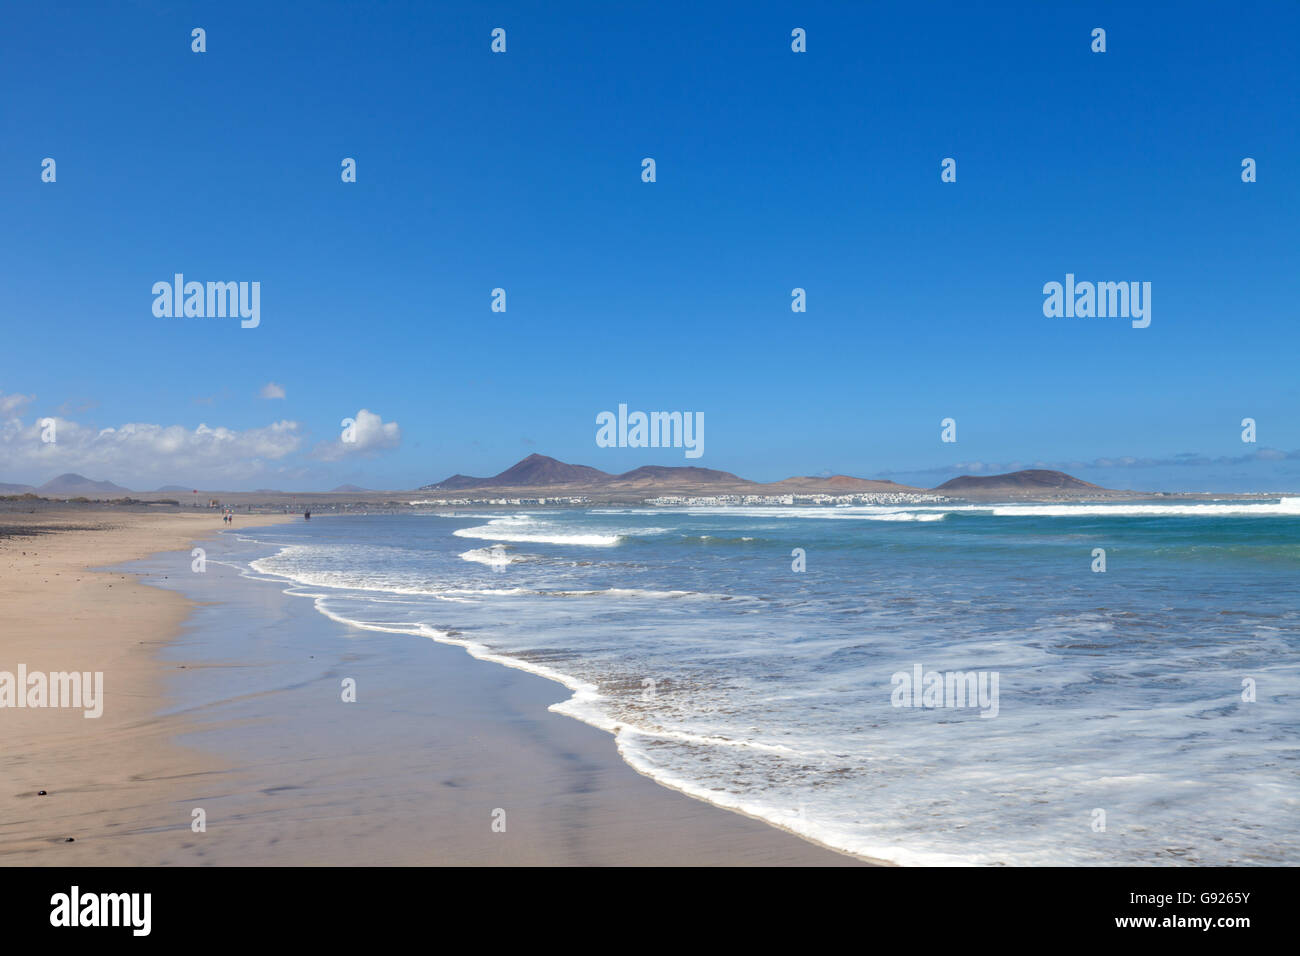 Waves breaking onto Playa de Famara beach Lanzarote, Canary Islands Stock Photo